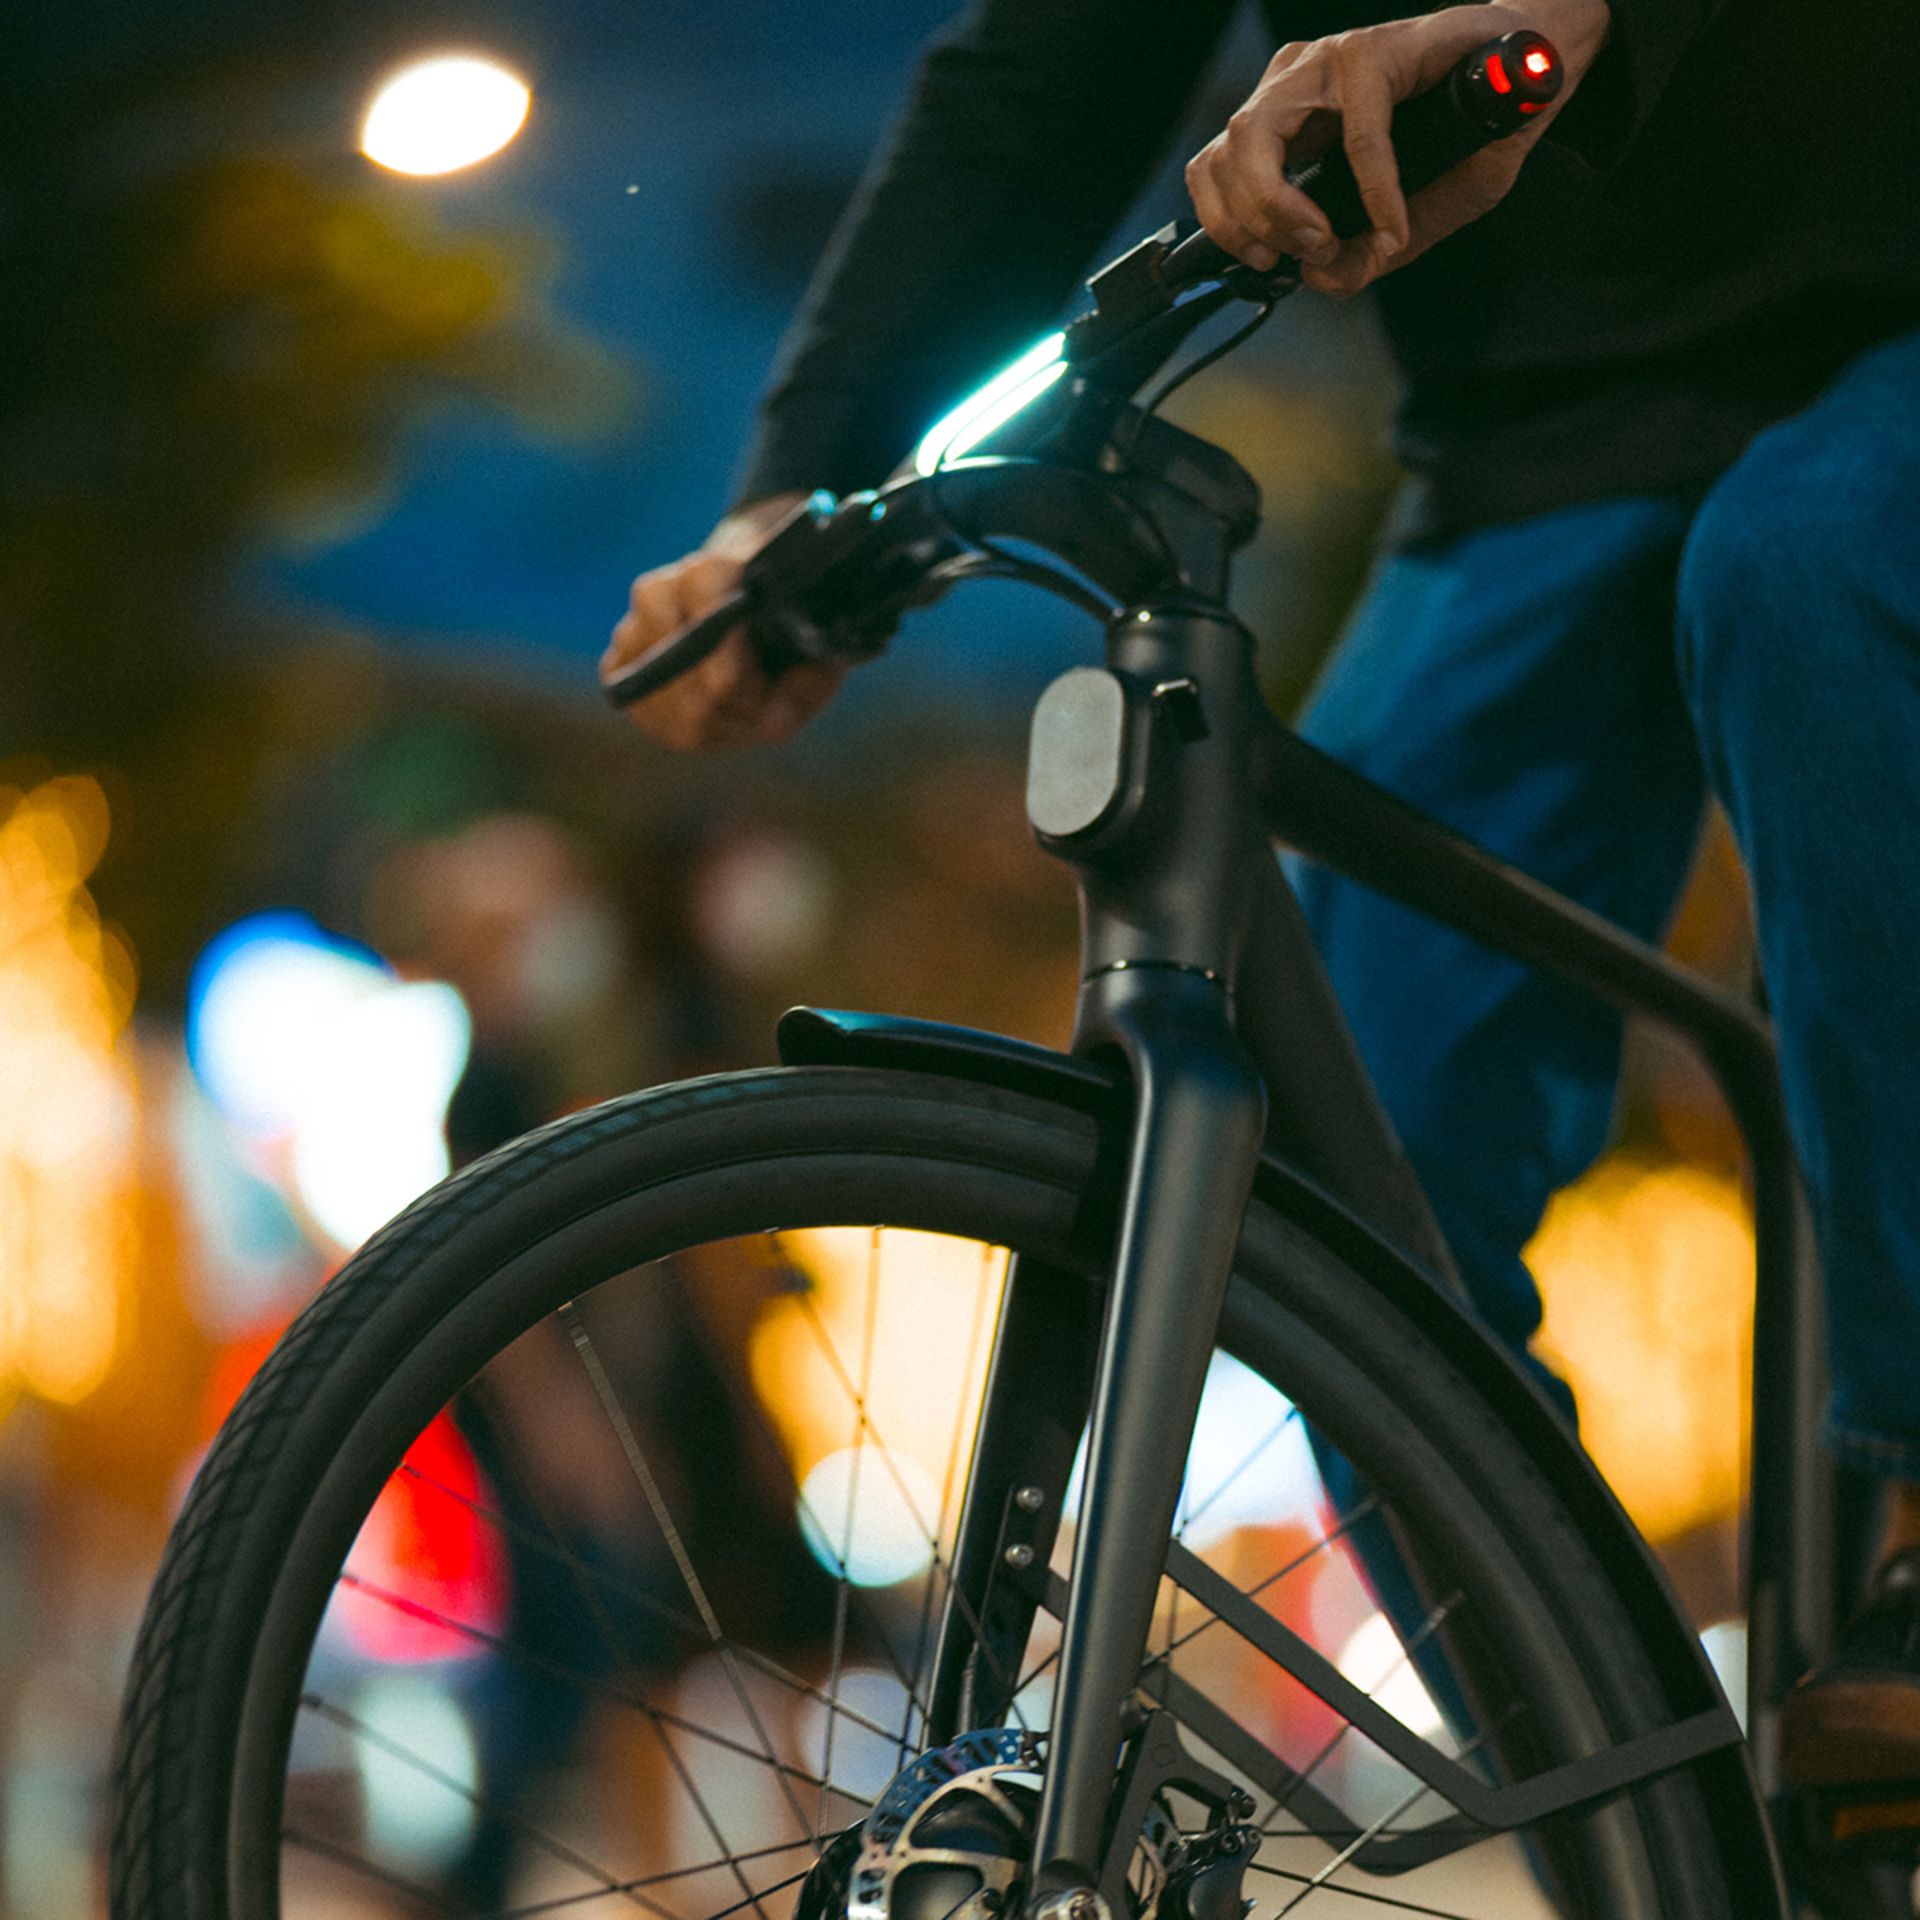 Modmo Saigon+ Electric Bicycle - RRP £2800 - Size S (Rider: 140-155cm) - Image 15 of 19